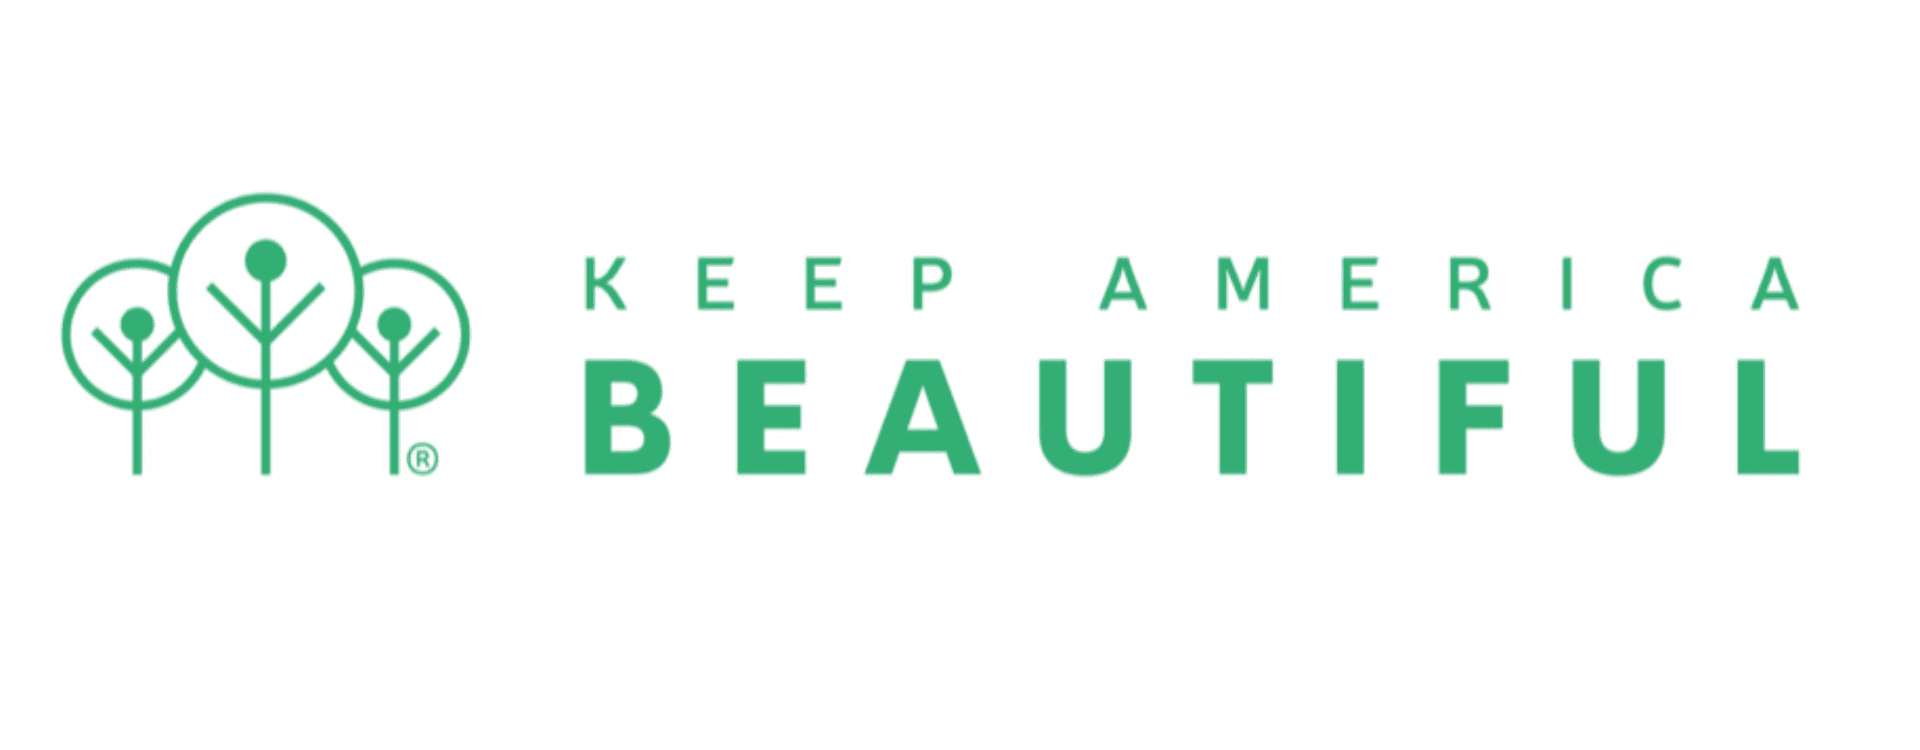 Keep America Beautiful logo